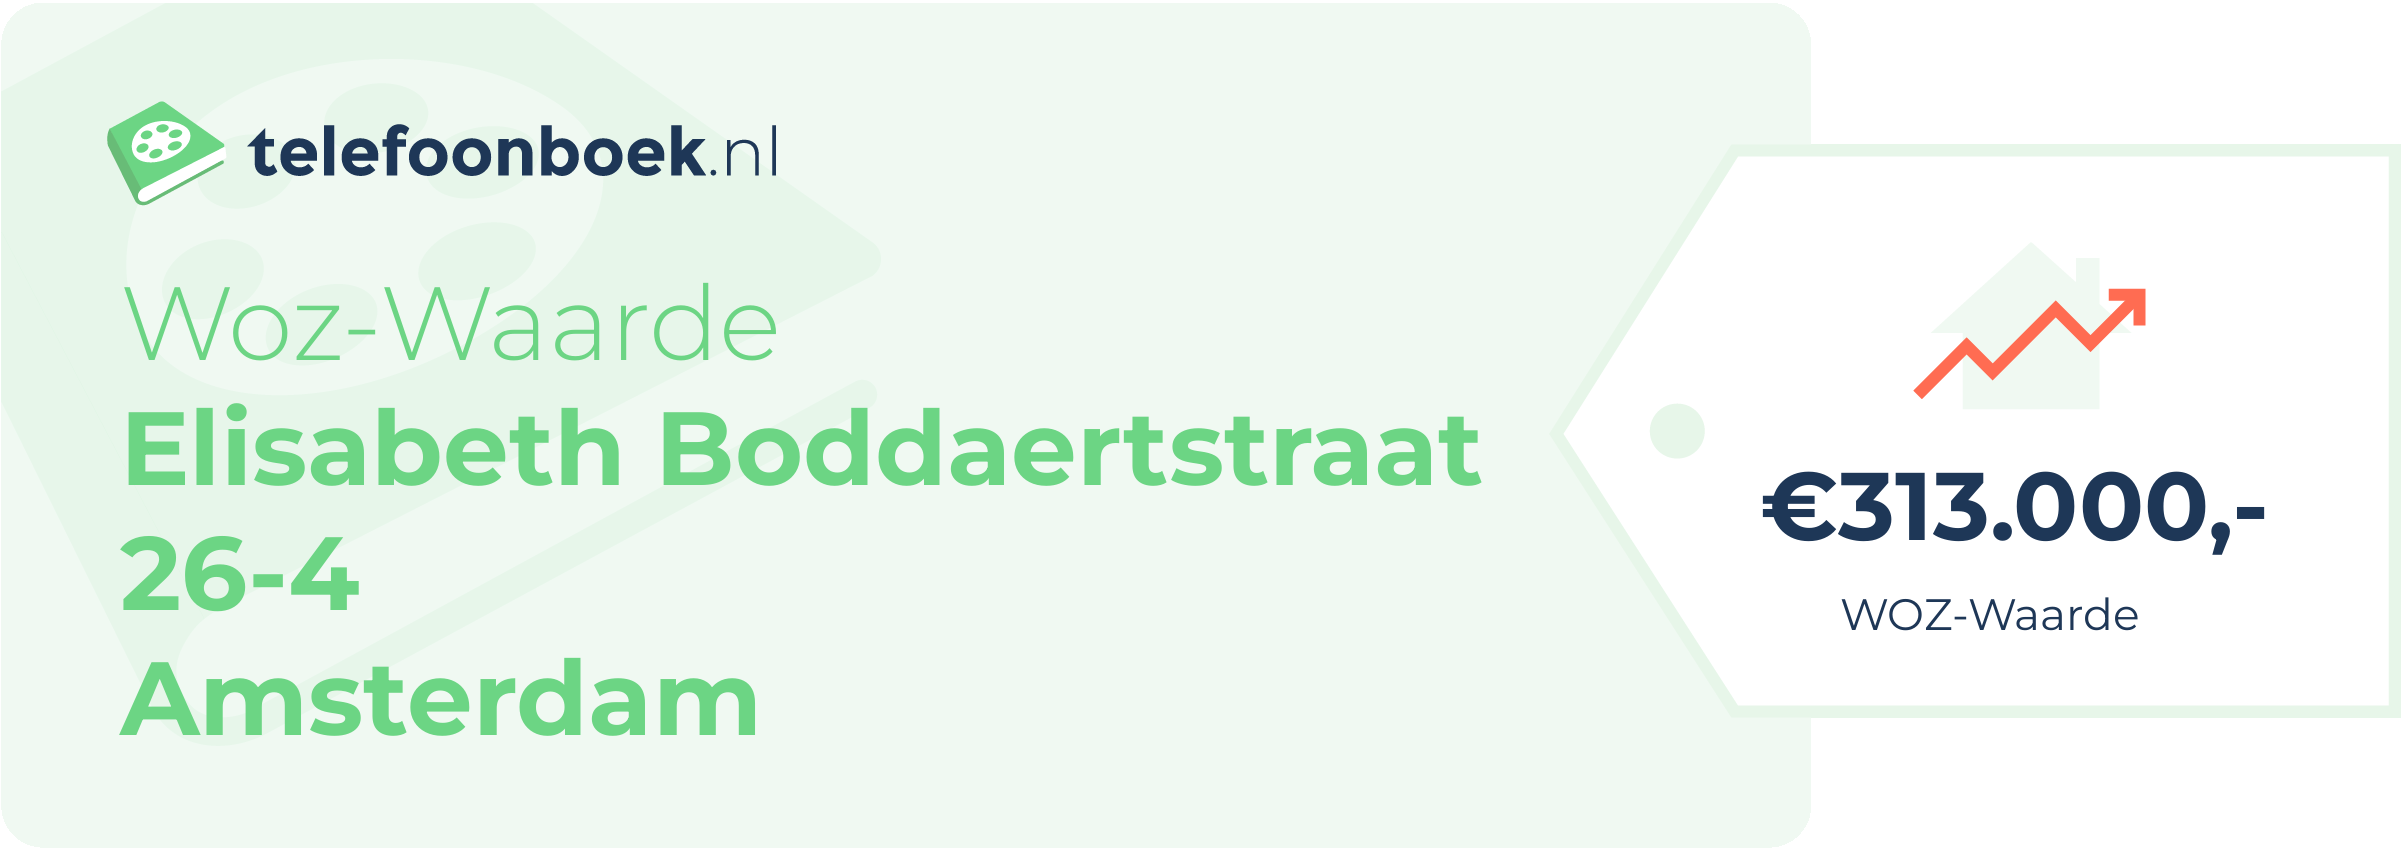 WOZ-waarde Elisabeth Boddaertstraat 26-4 Amsterdam